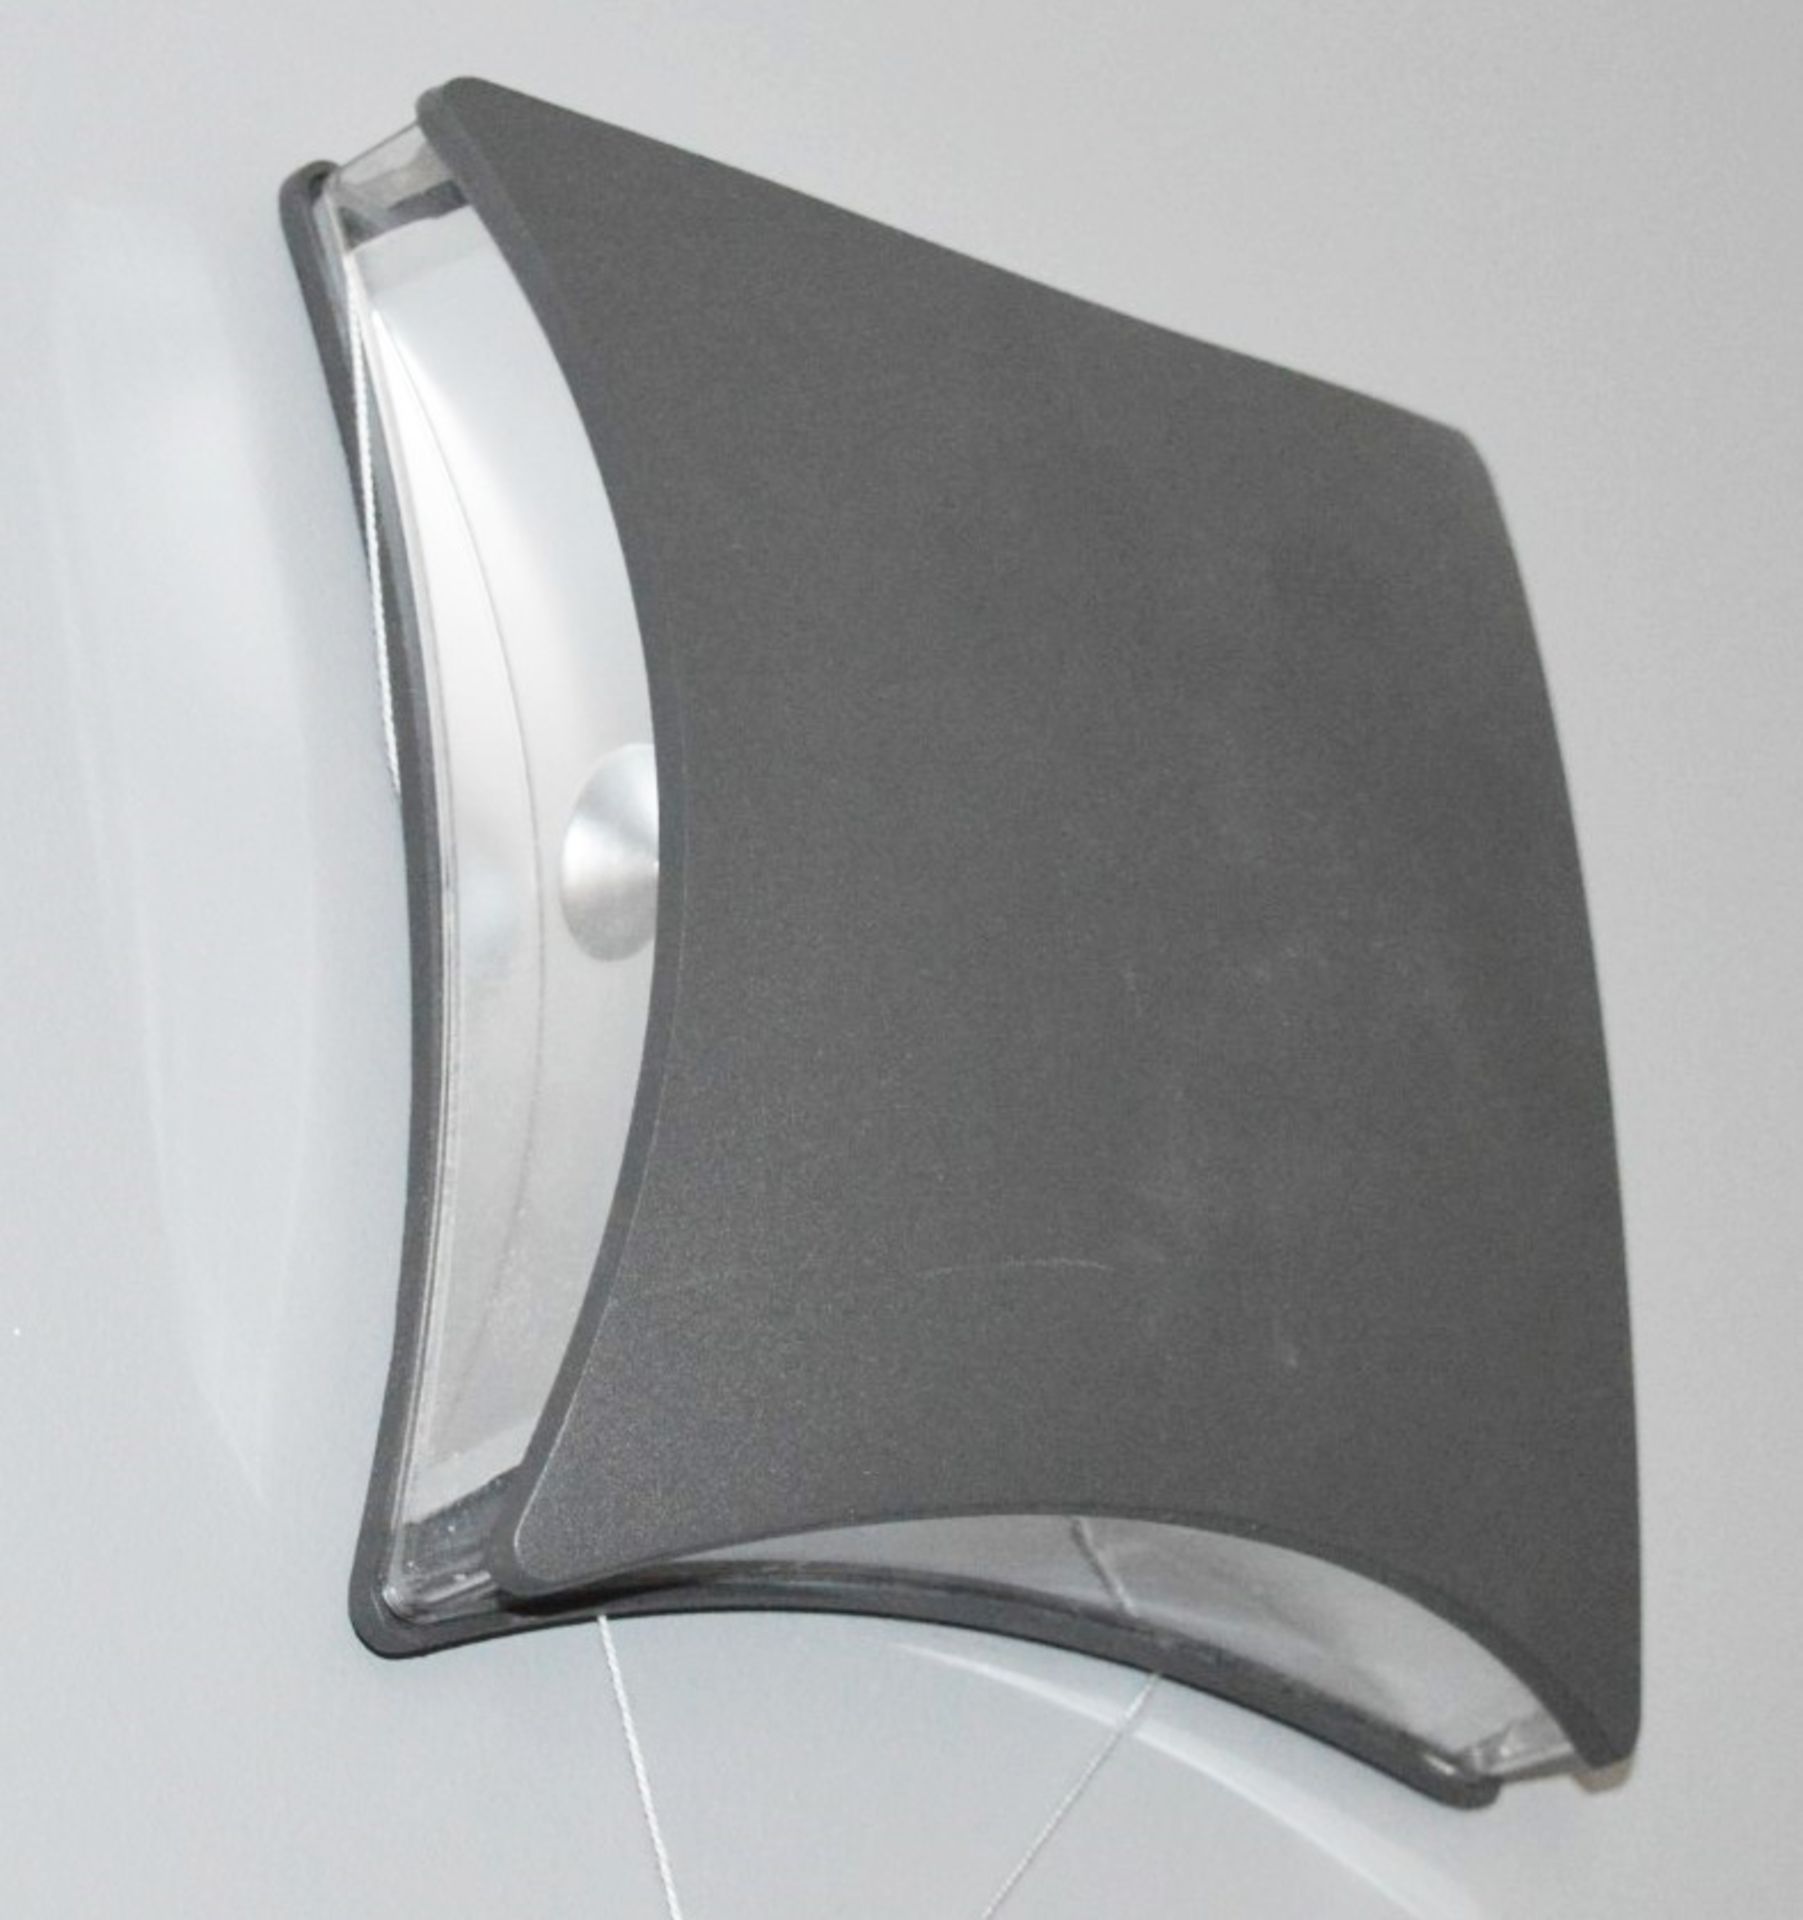 1 x Die Cast Aluminium Outdoor LED Light Fitting, Dark Grey Wall Bracket - Ex Display - RRP £108.00 - Image 2 of 2